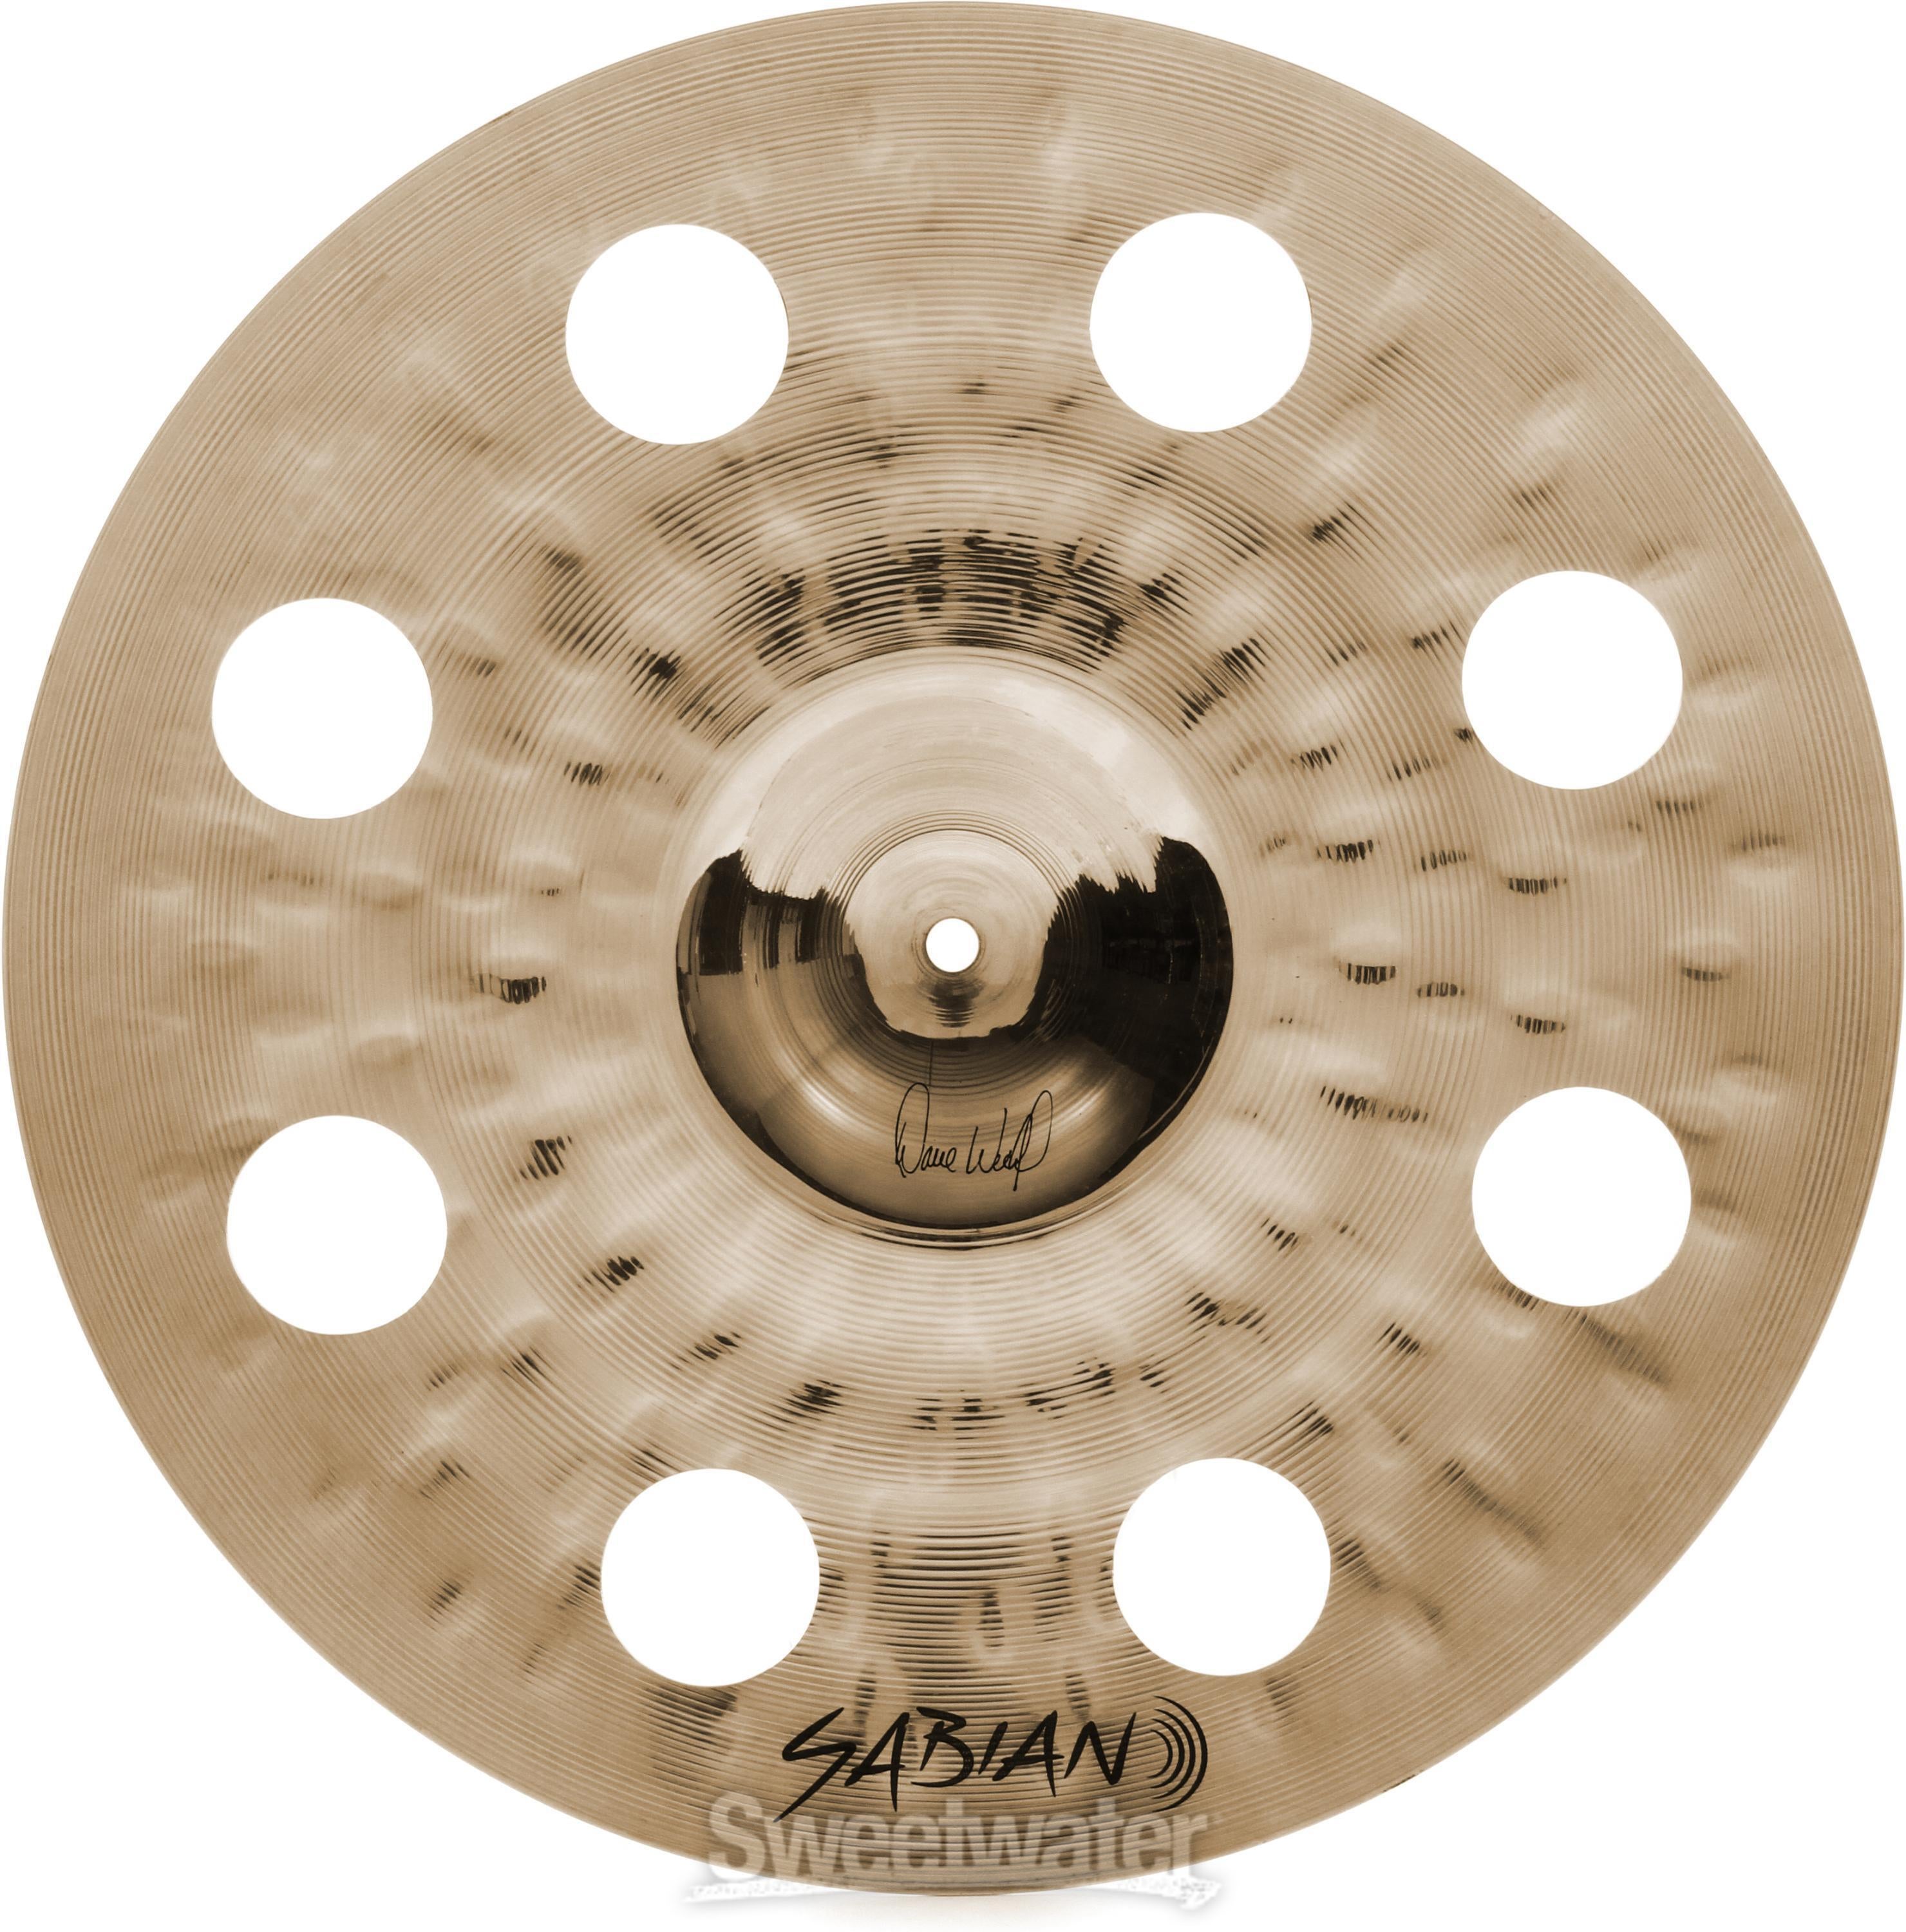 Sabian 18 inch HHX O-Zone Crash Cymbal - Brilliant Finish Reviews 